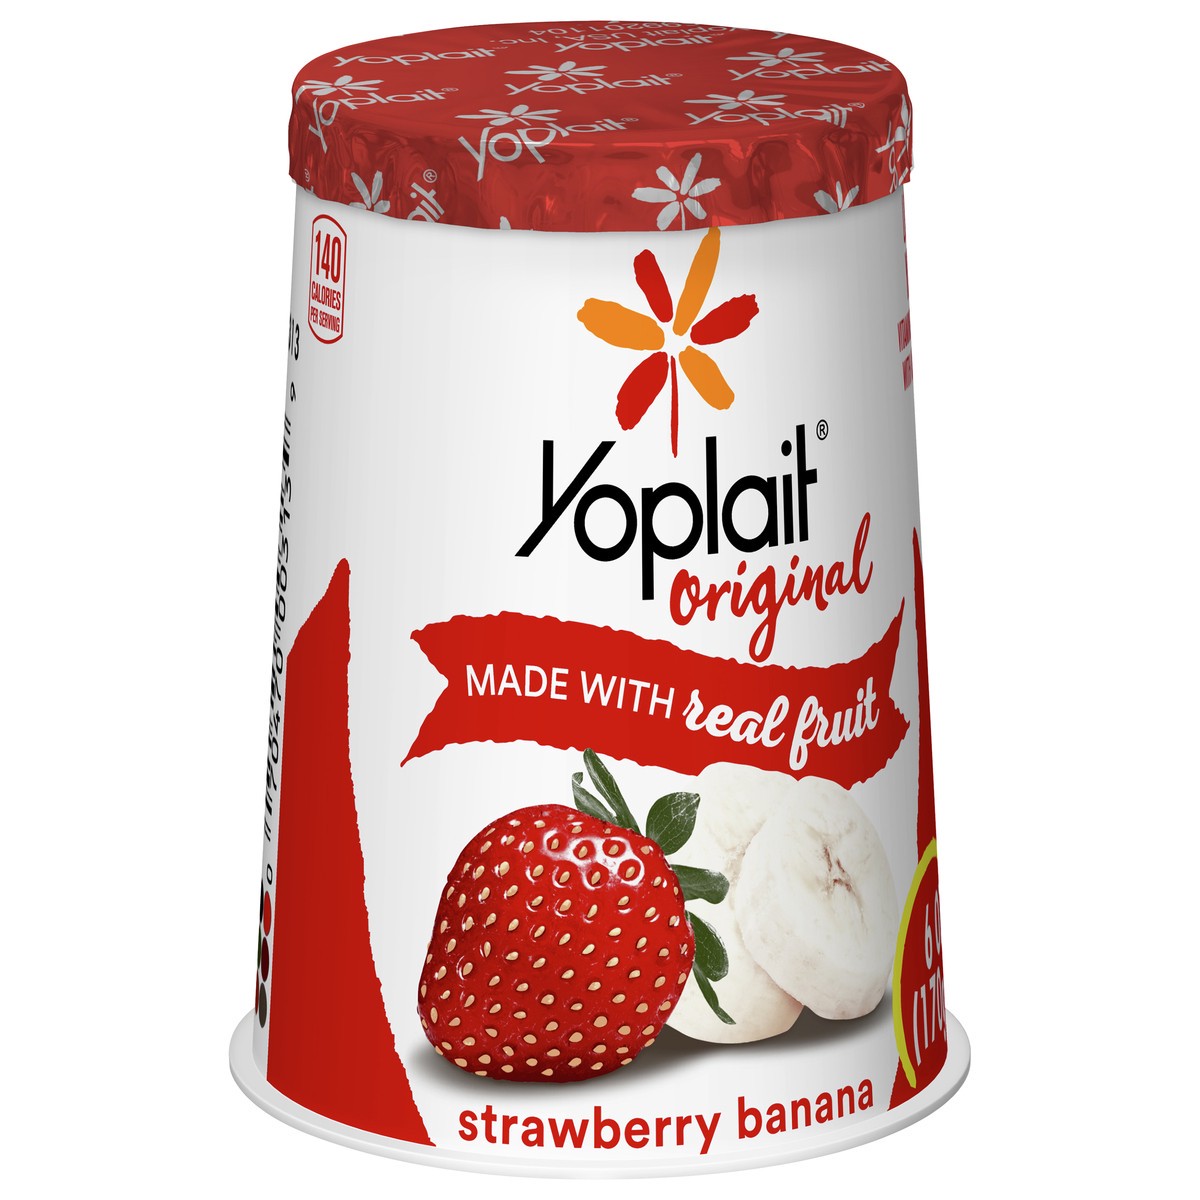 slide 2 of 9, Yoplait Original Strawberry Banana Low Fat Yogurt, 6 OZ Yogurt Cup, 6 oz